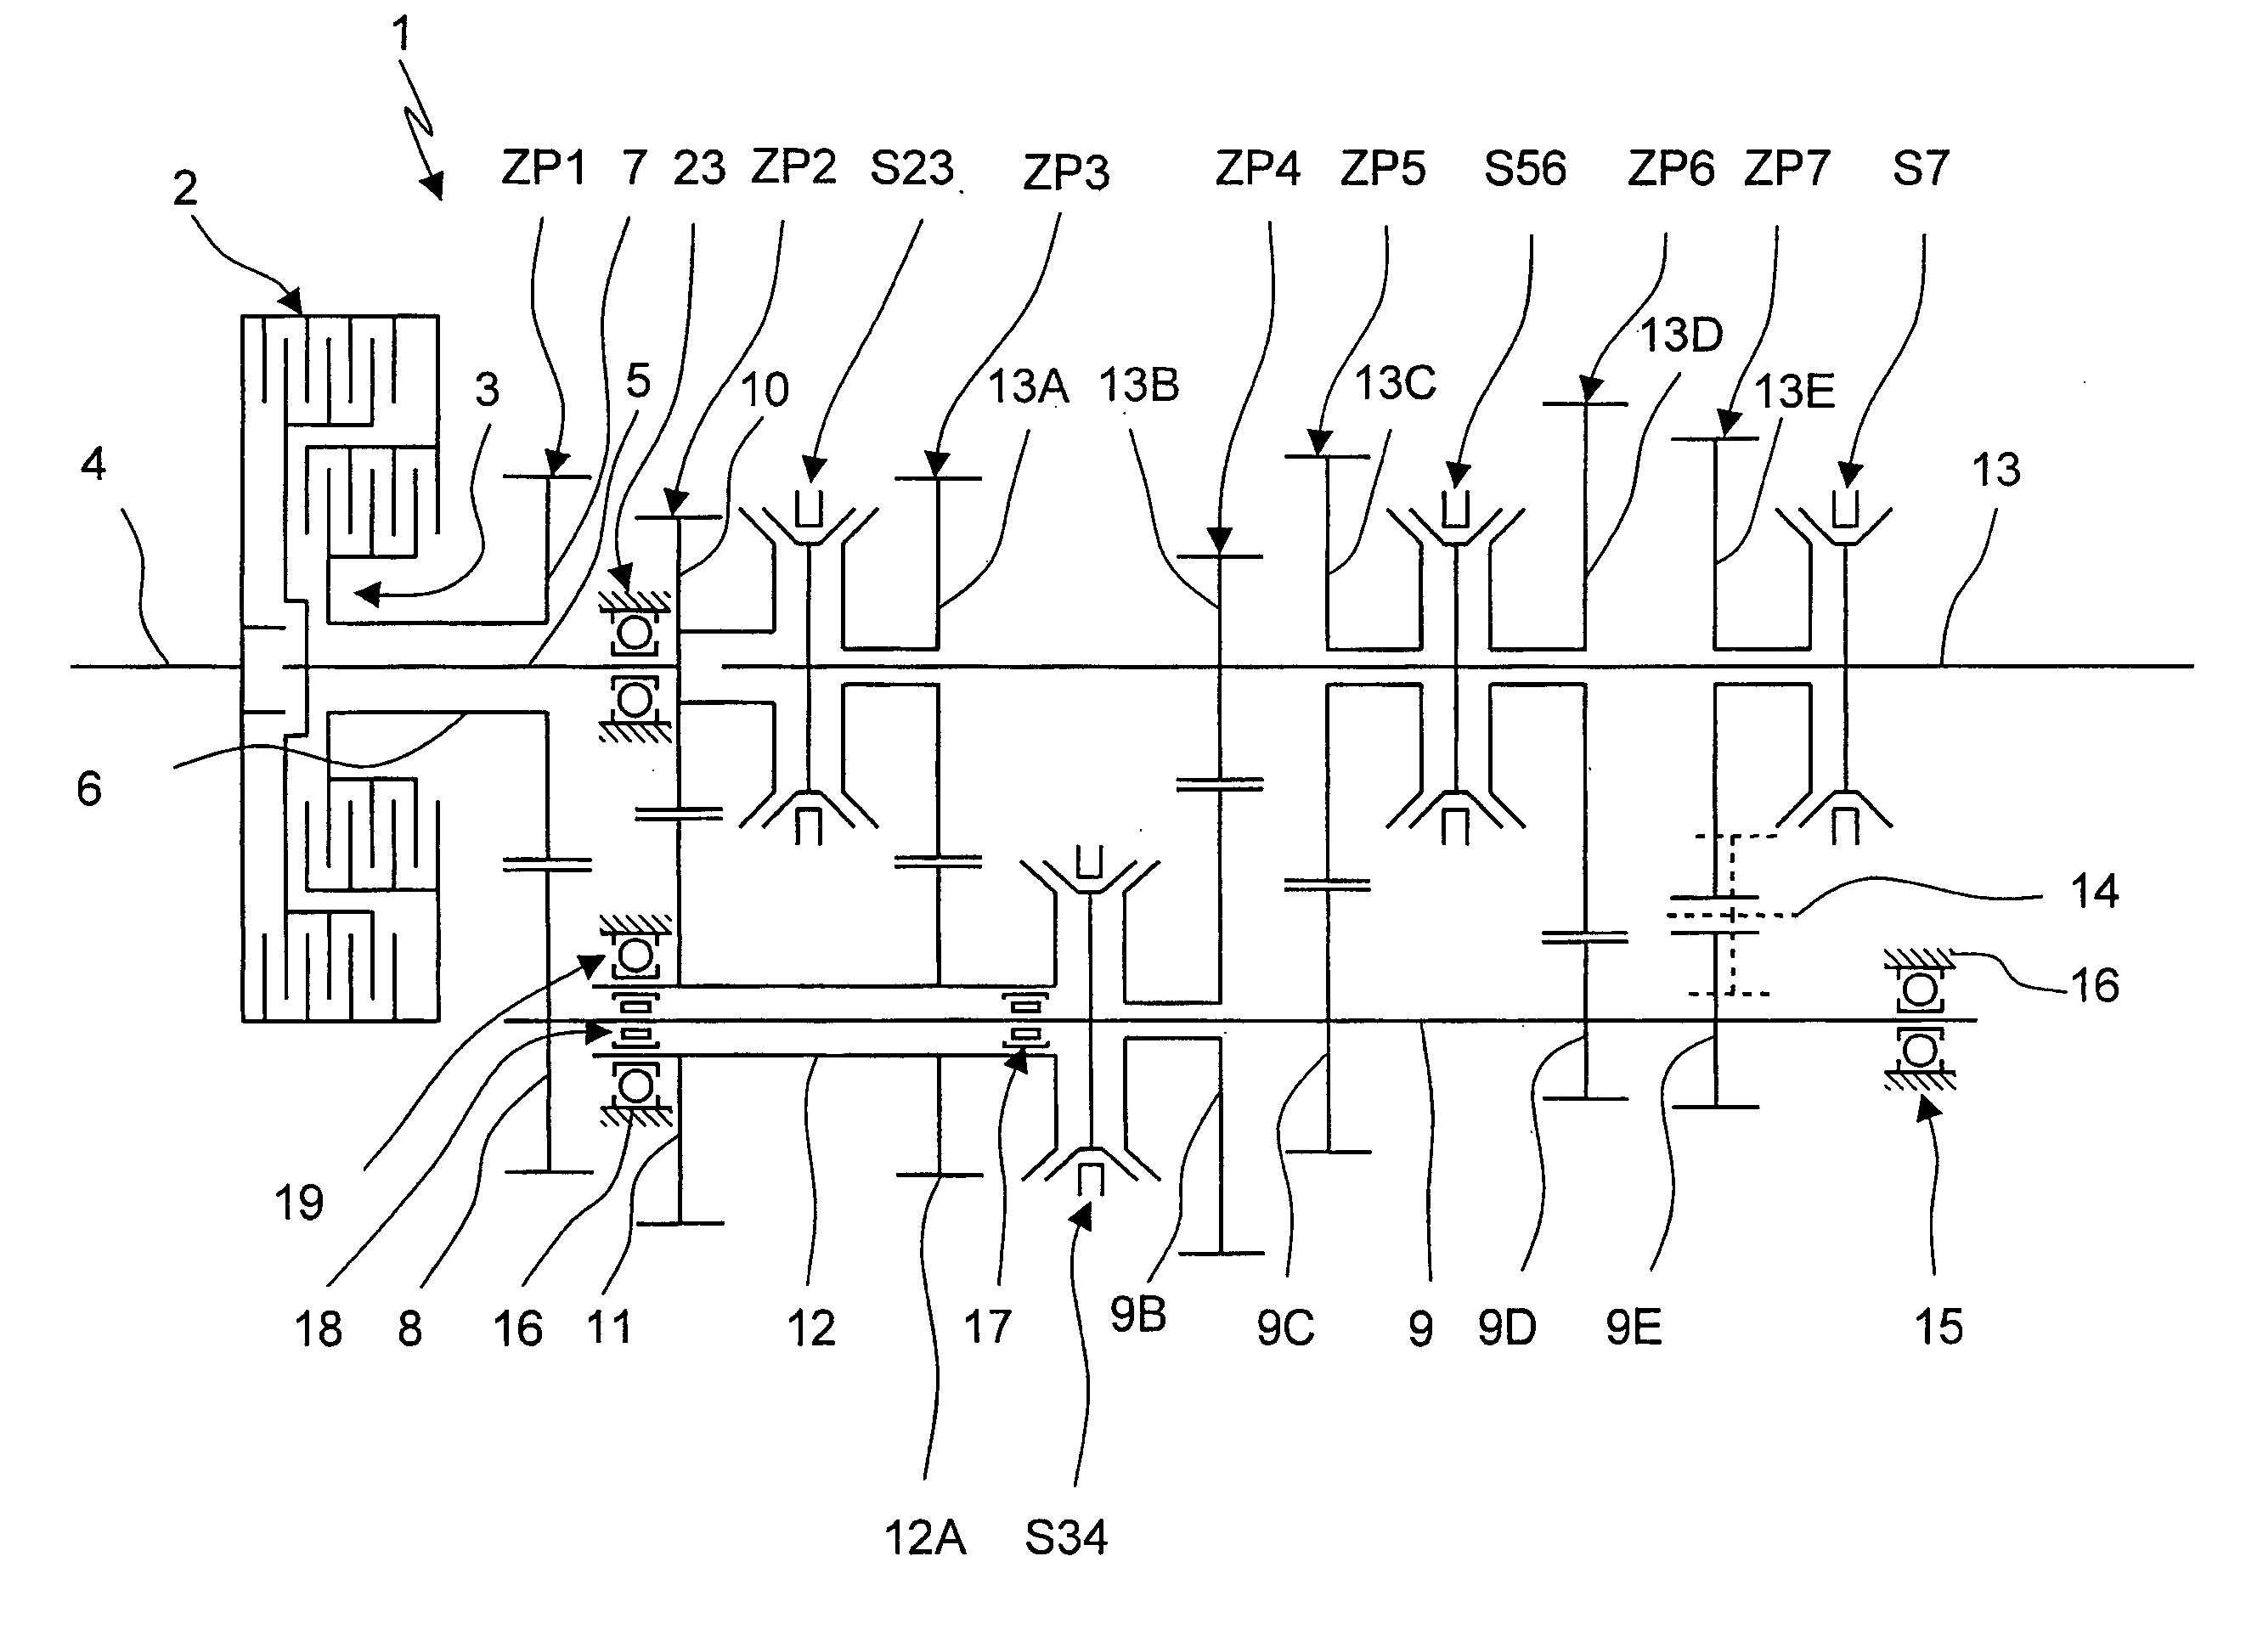 Multistep transmission of a layshaft type